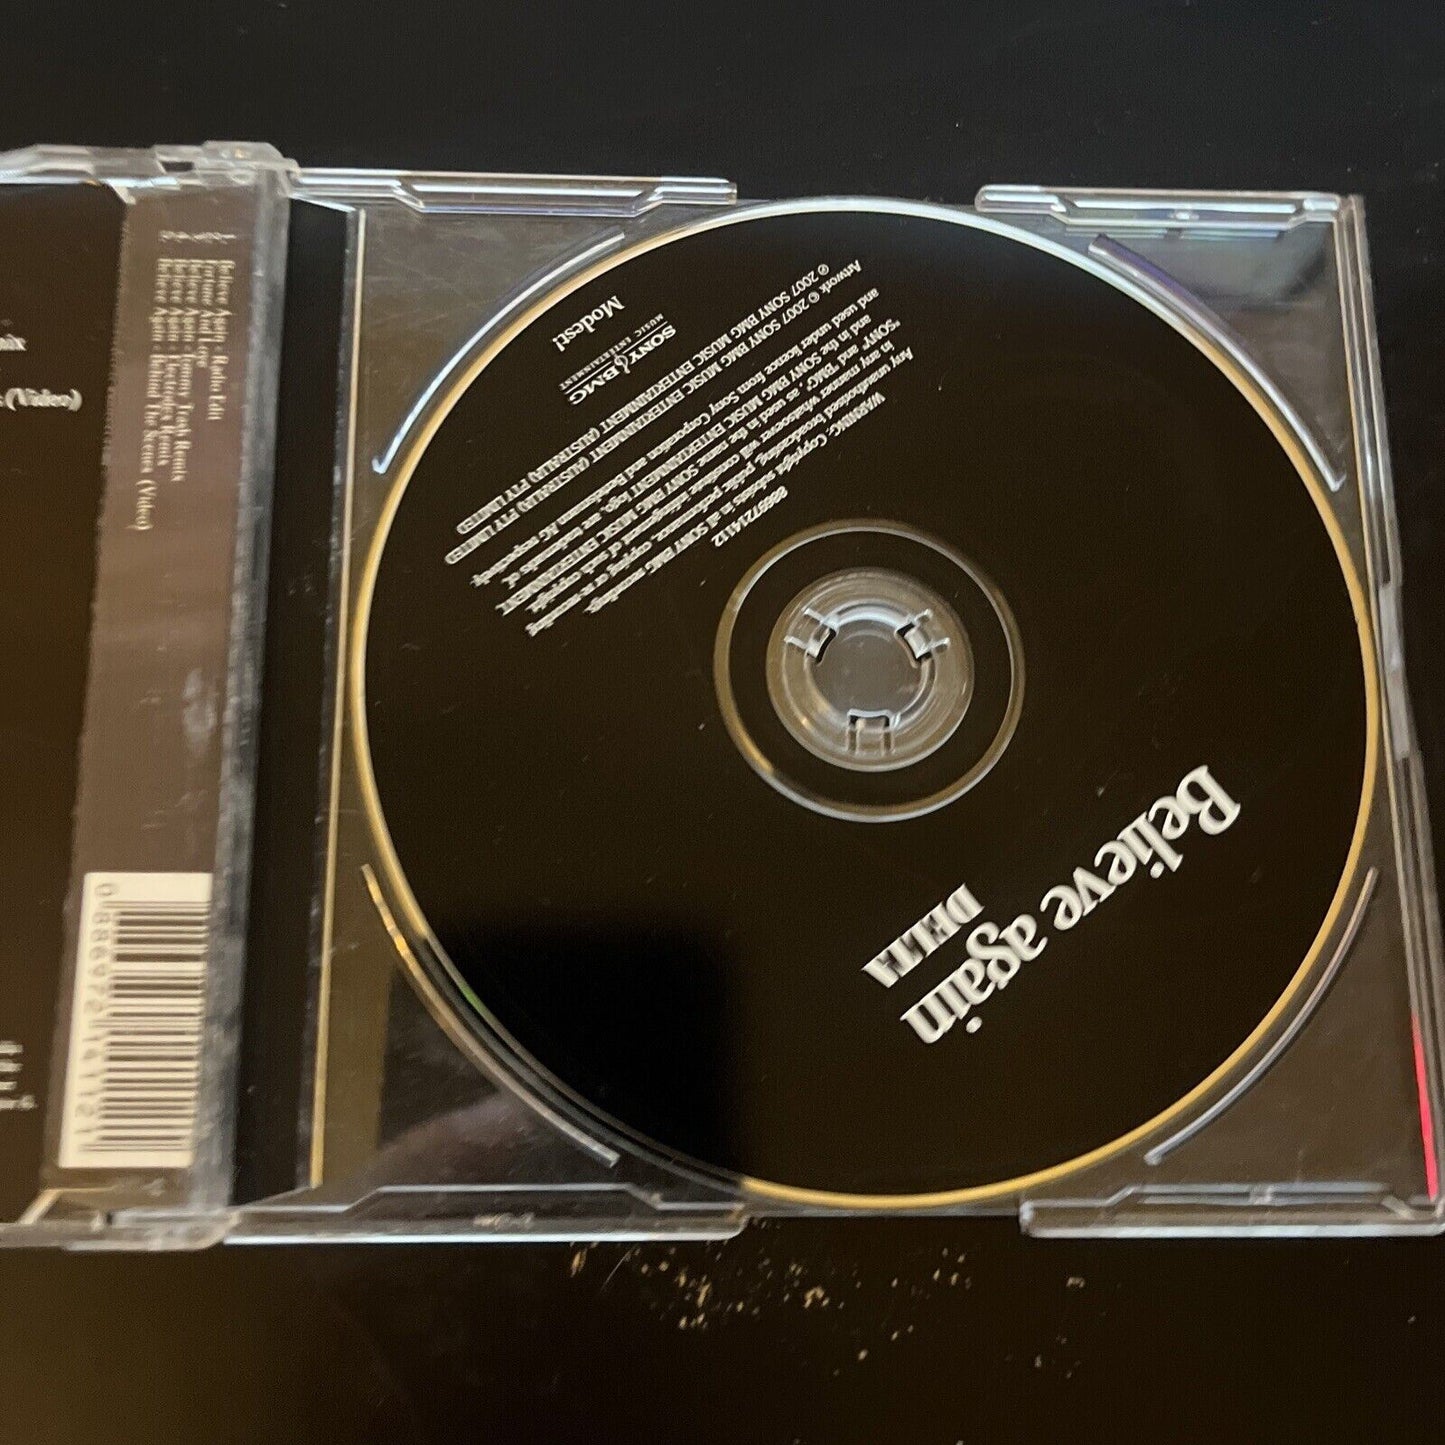 Delta Goodrem - Believe Again (CD, 2007) Single